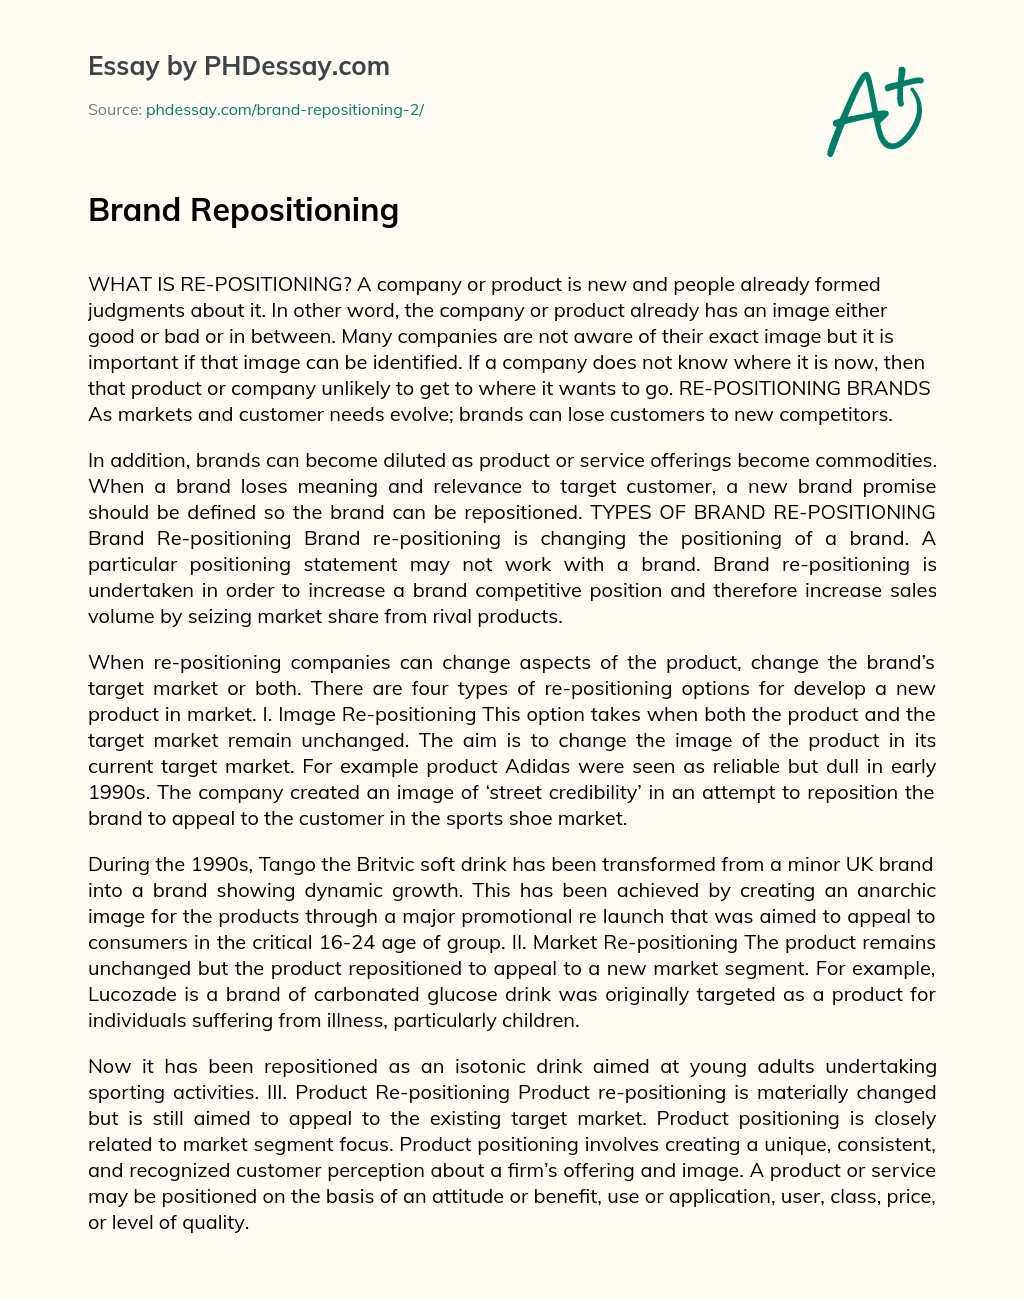 Brand Repositioning essay